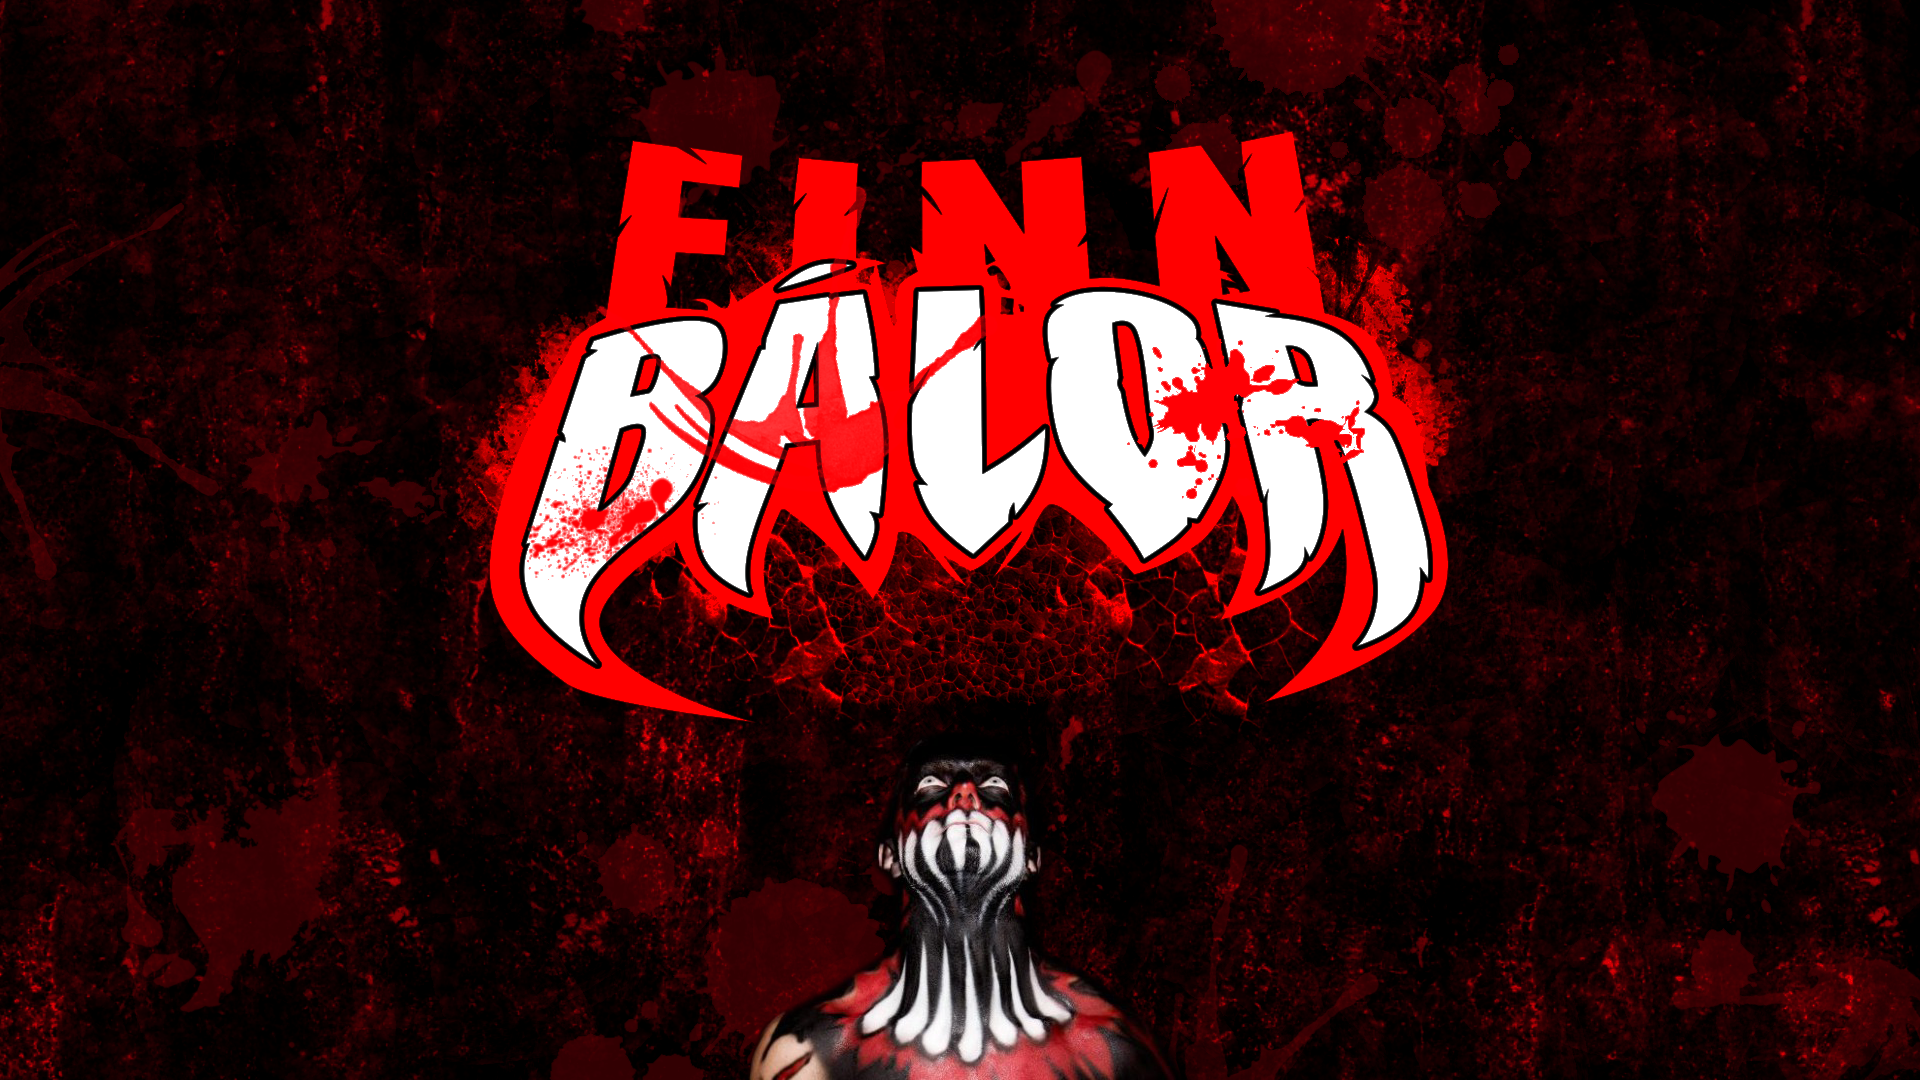 Finn Balor Logo Wallpapers - Wallpaper Cave